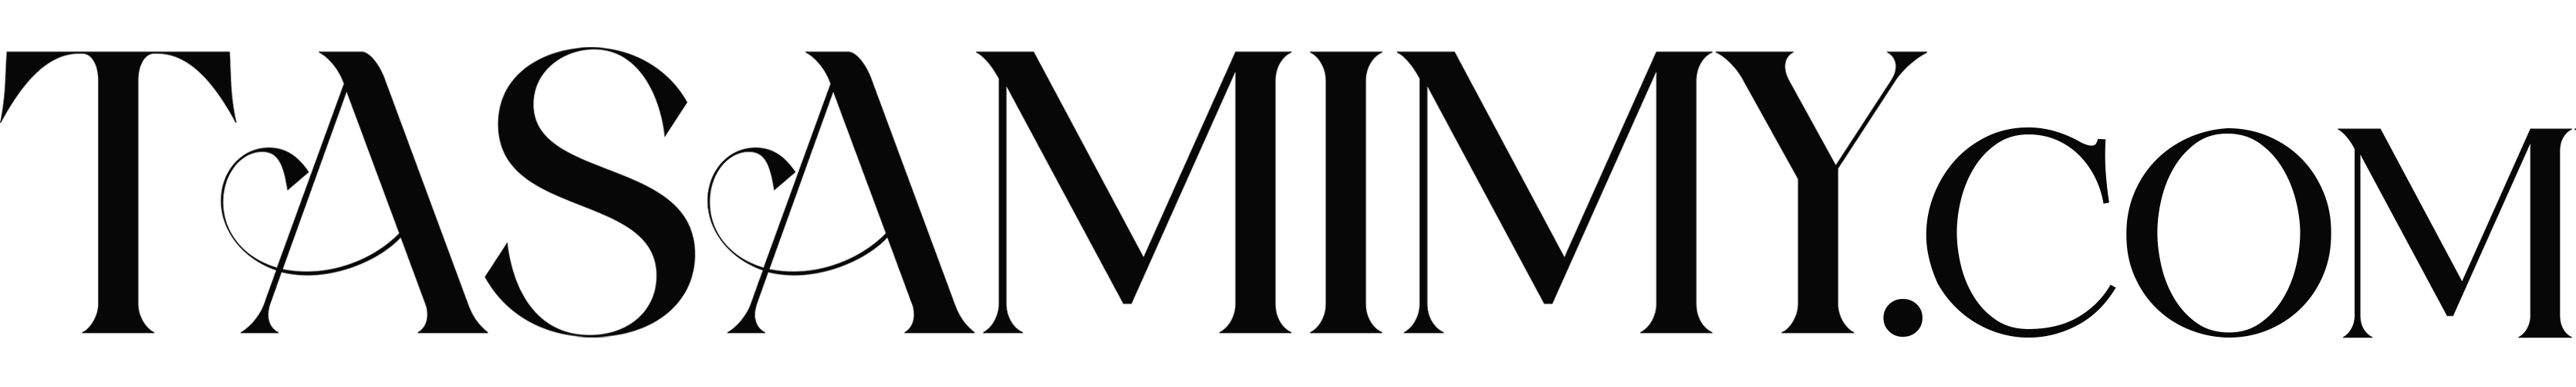 tasamimy logo updated